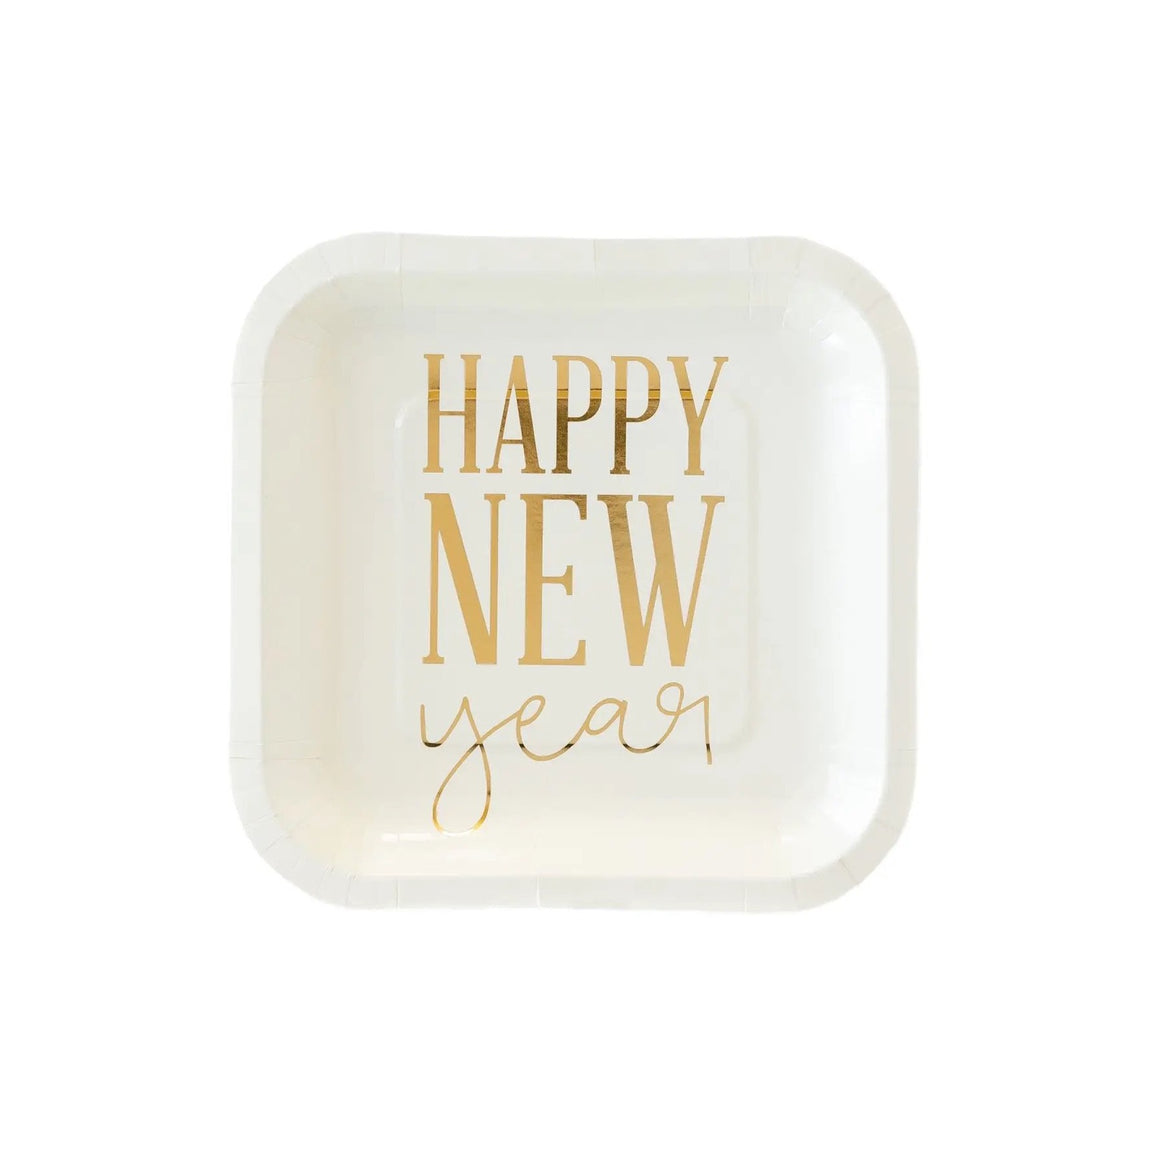 PLATES - SMALL HAPPY NEW YEAR